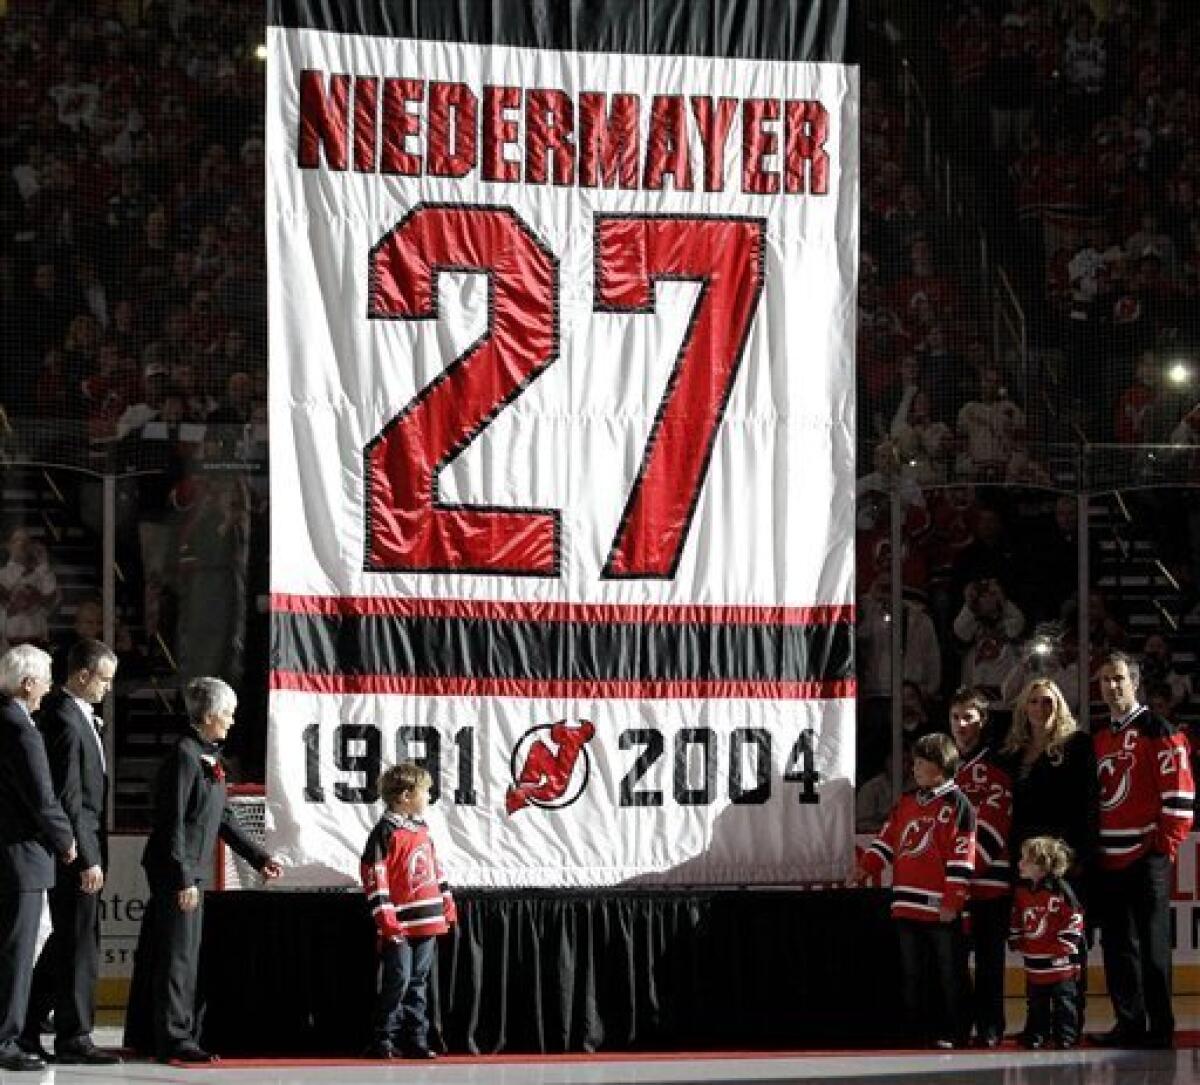 Scott Niedermayer New Jersey Devils Autographed 2000 Stanley Cup